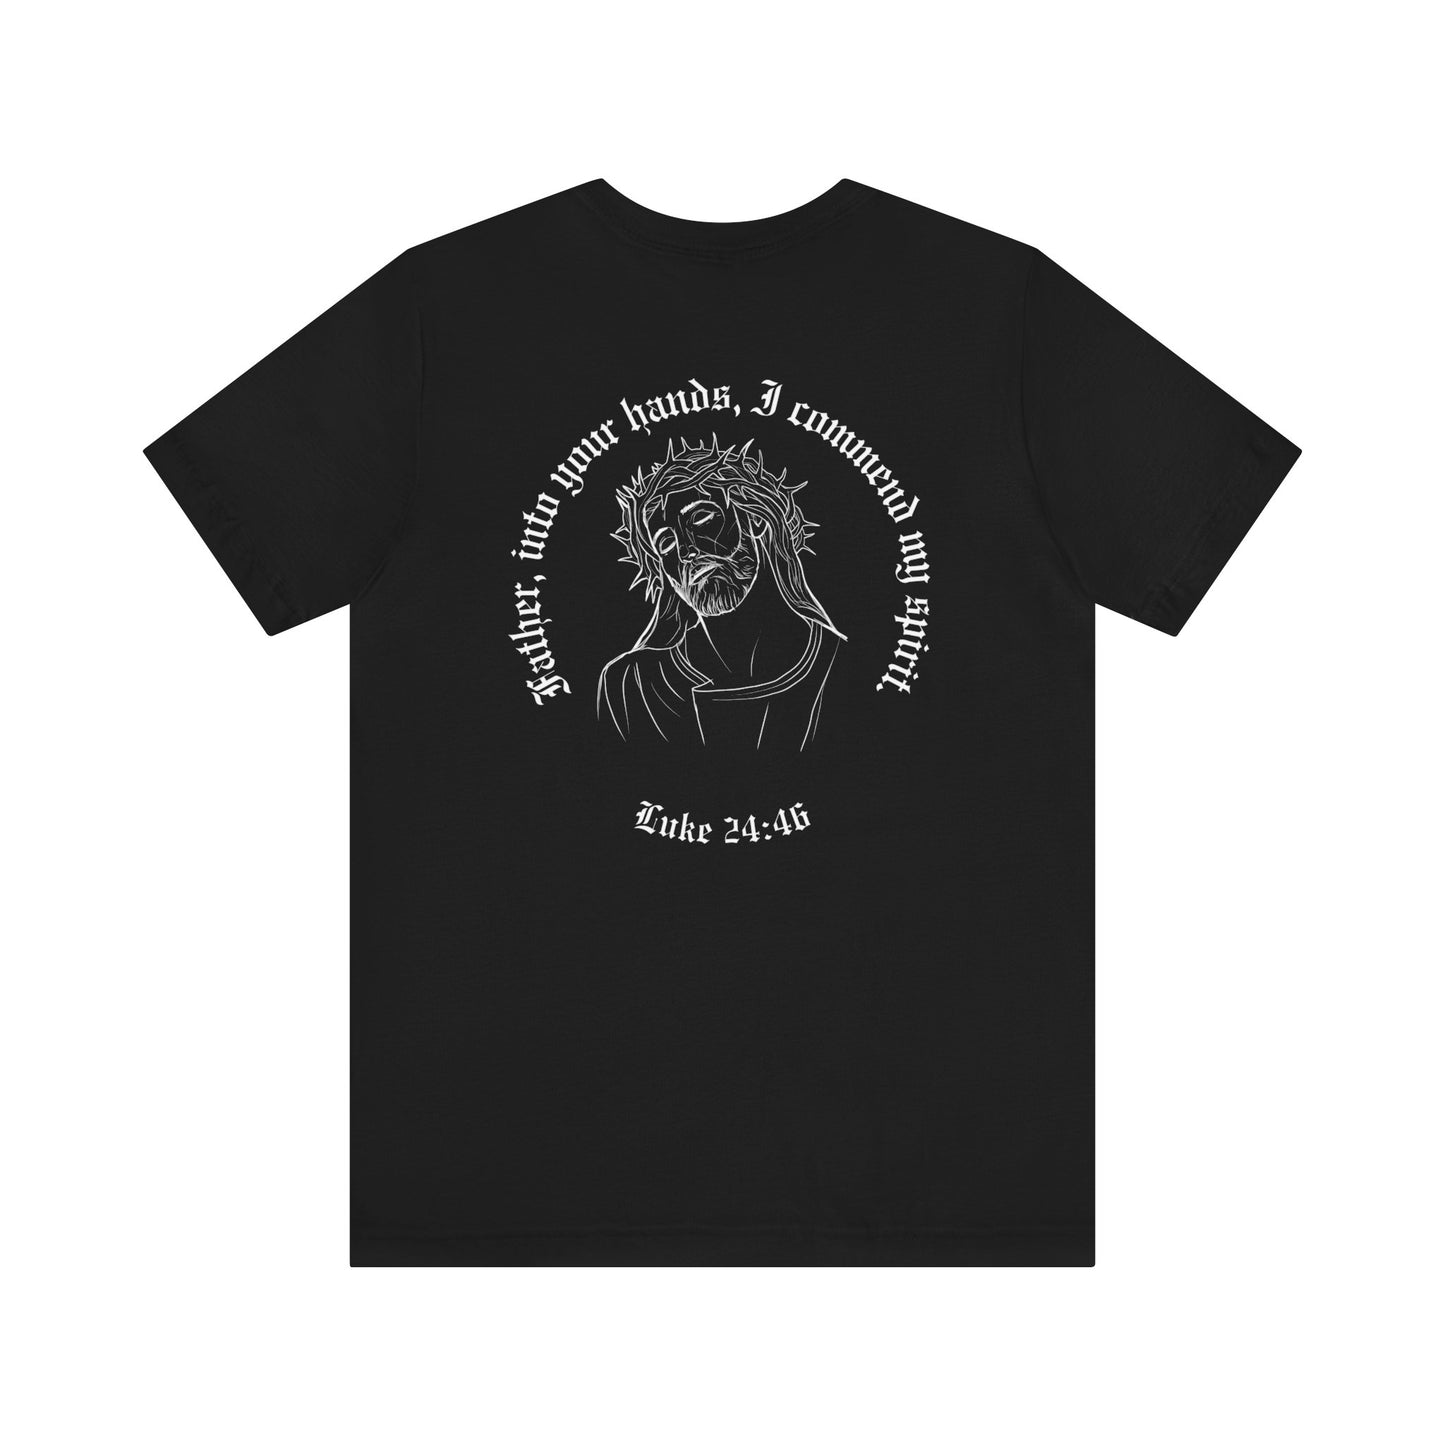 Luke 24:46 Gothic Style T-Shirt